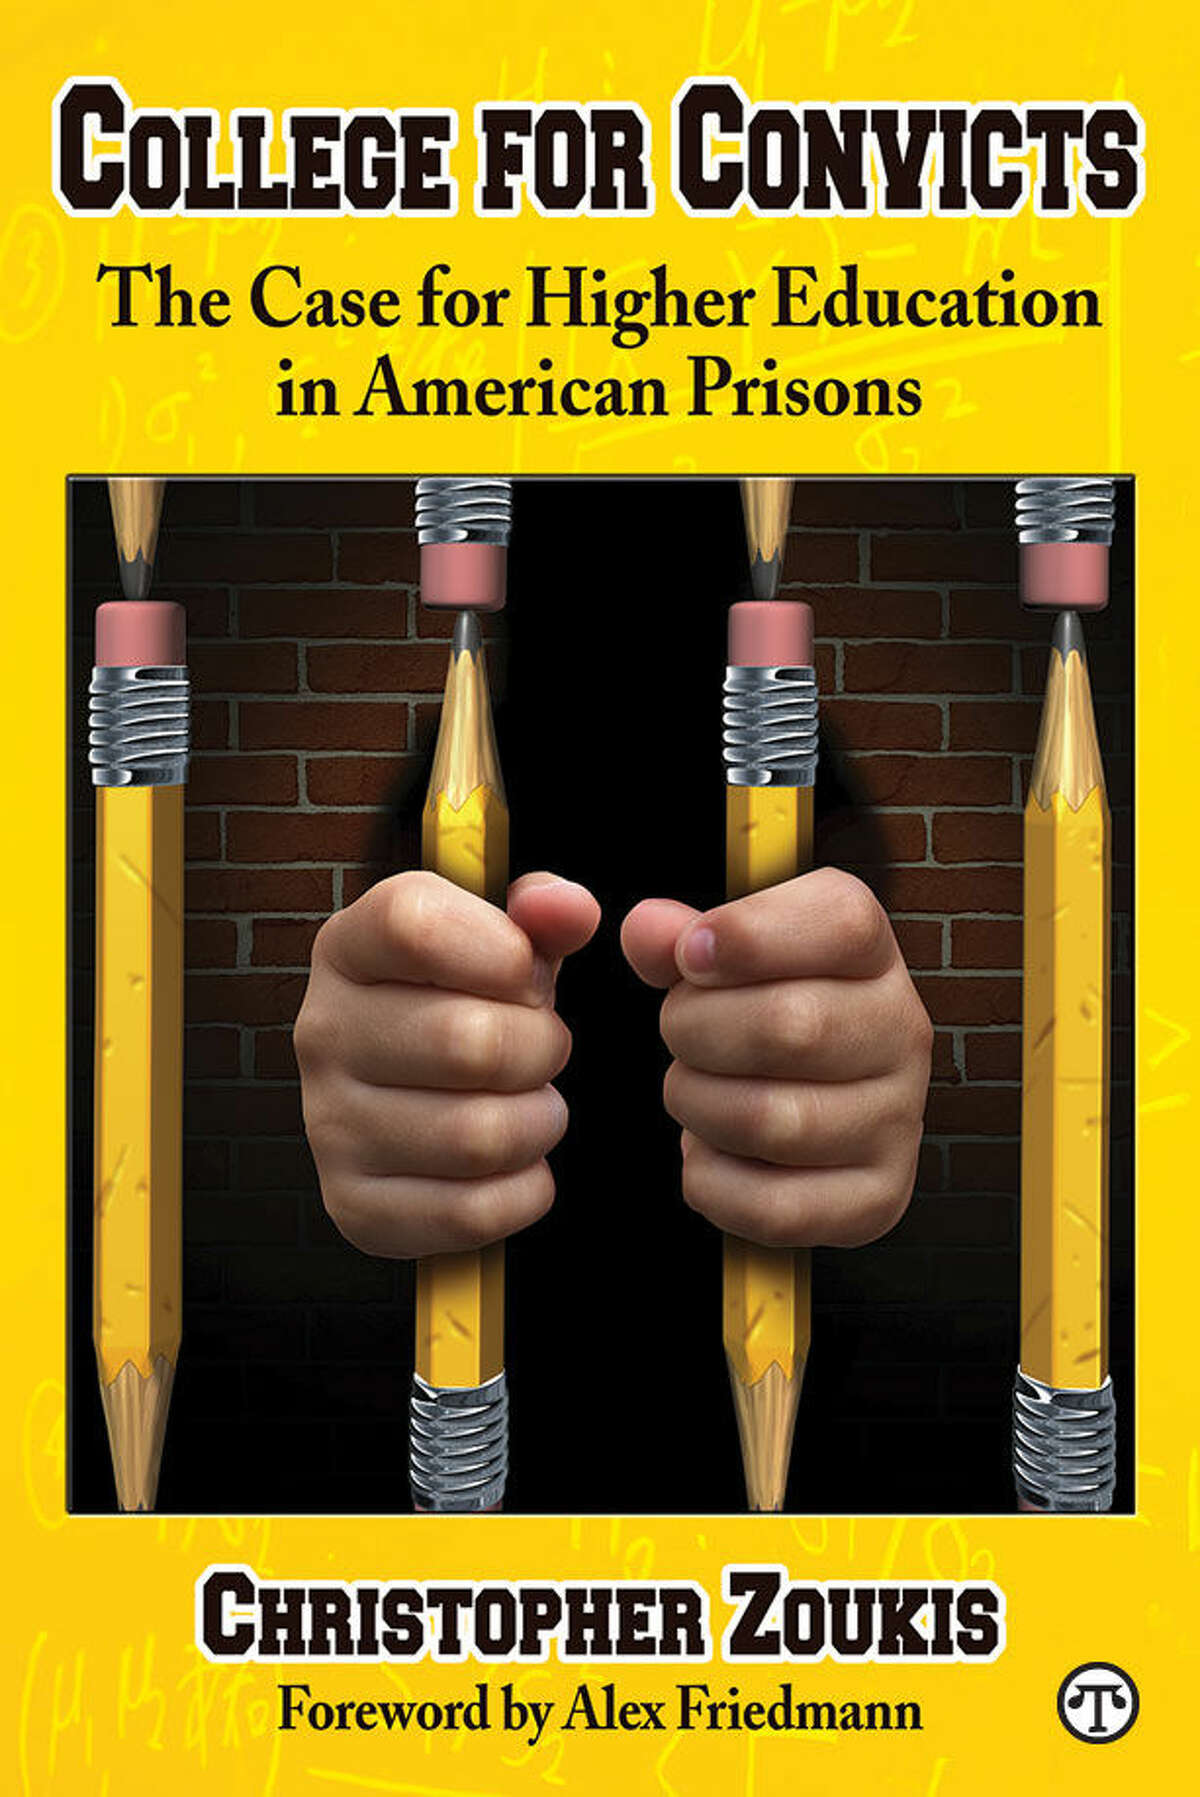 Experts advise: Educating prisoners can reduce recidivism. (NAPS)